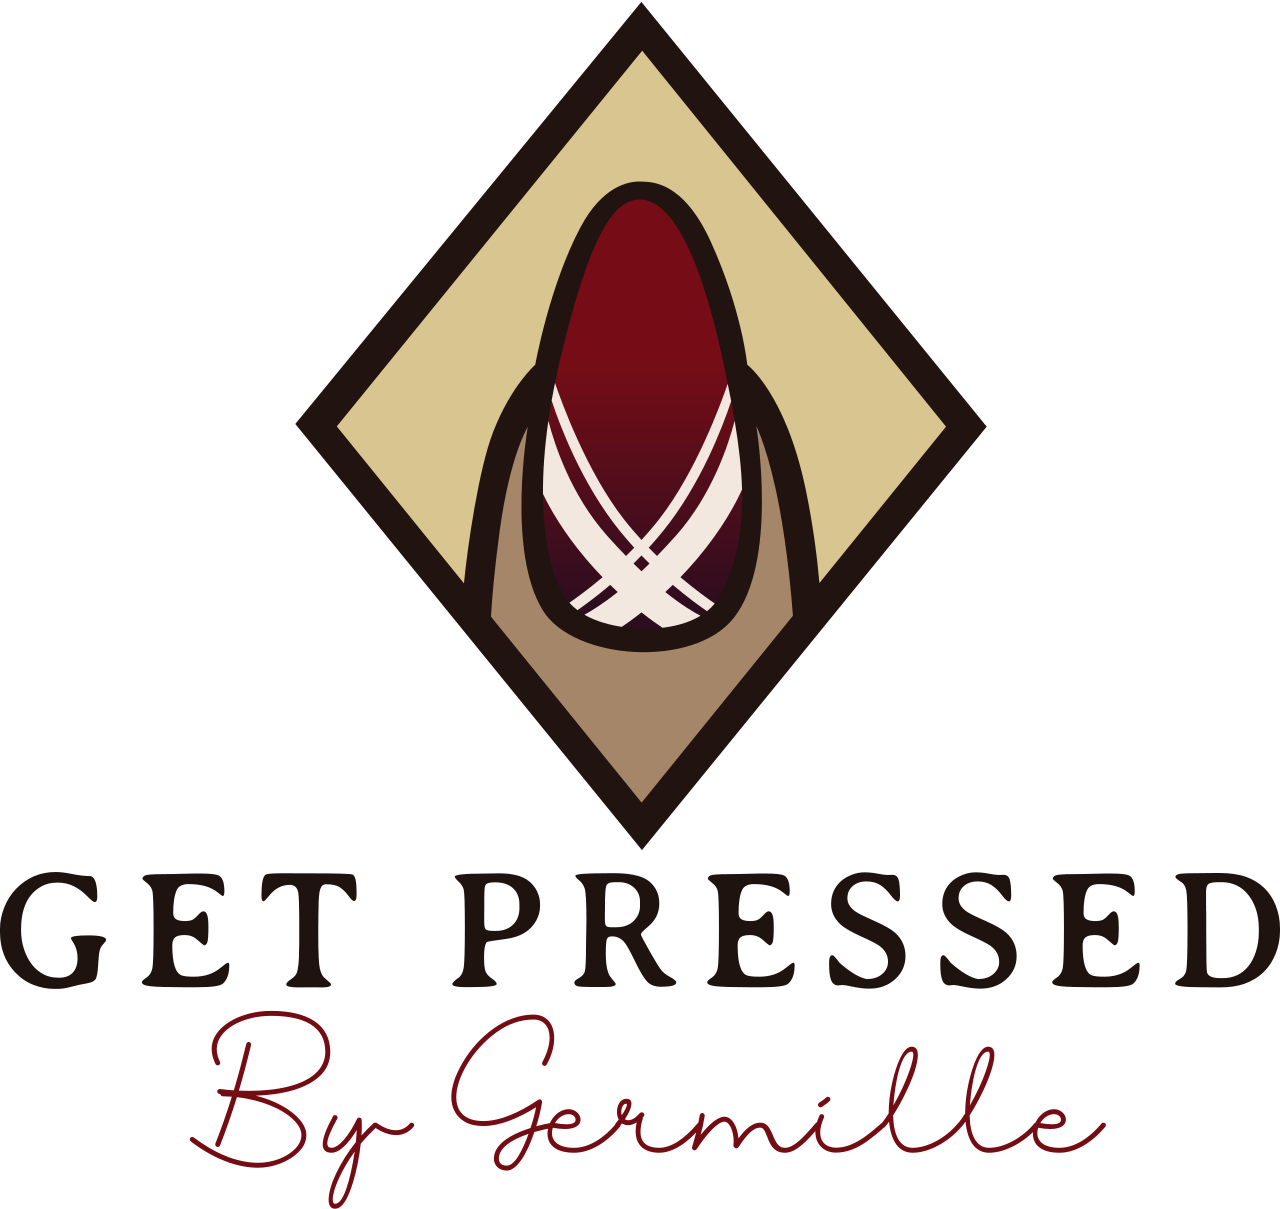 Get Pressed's logo